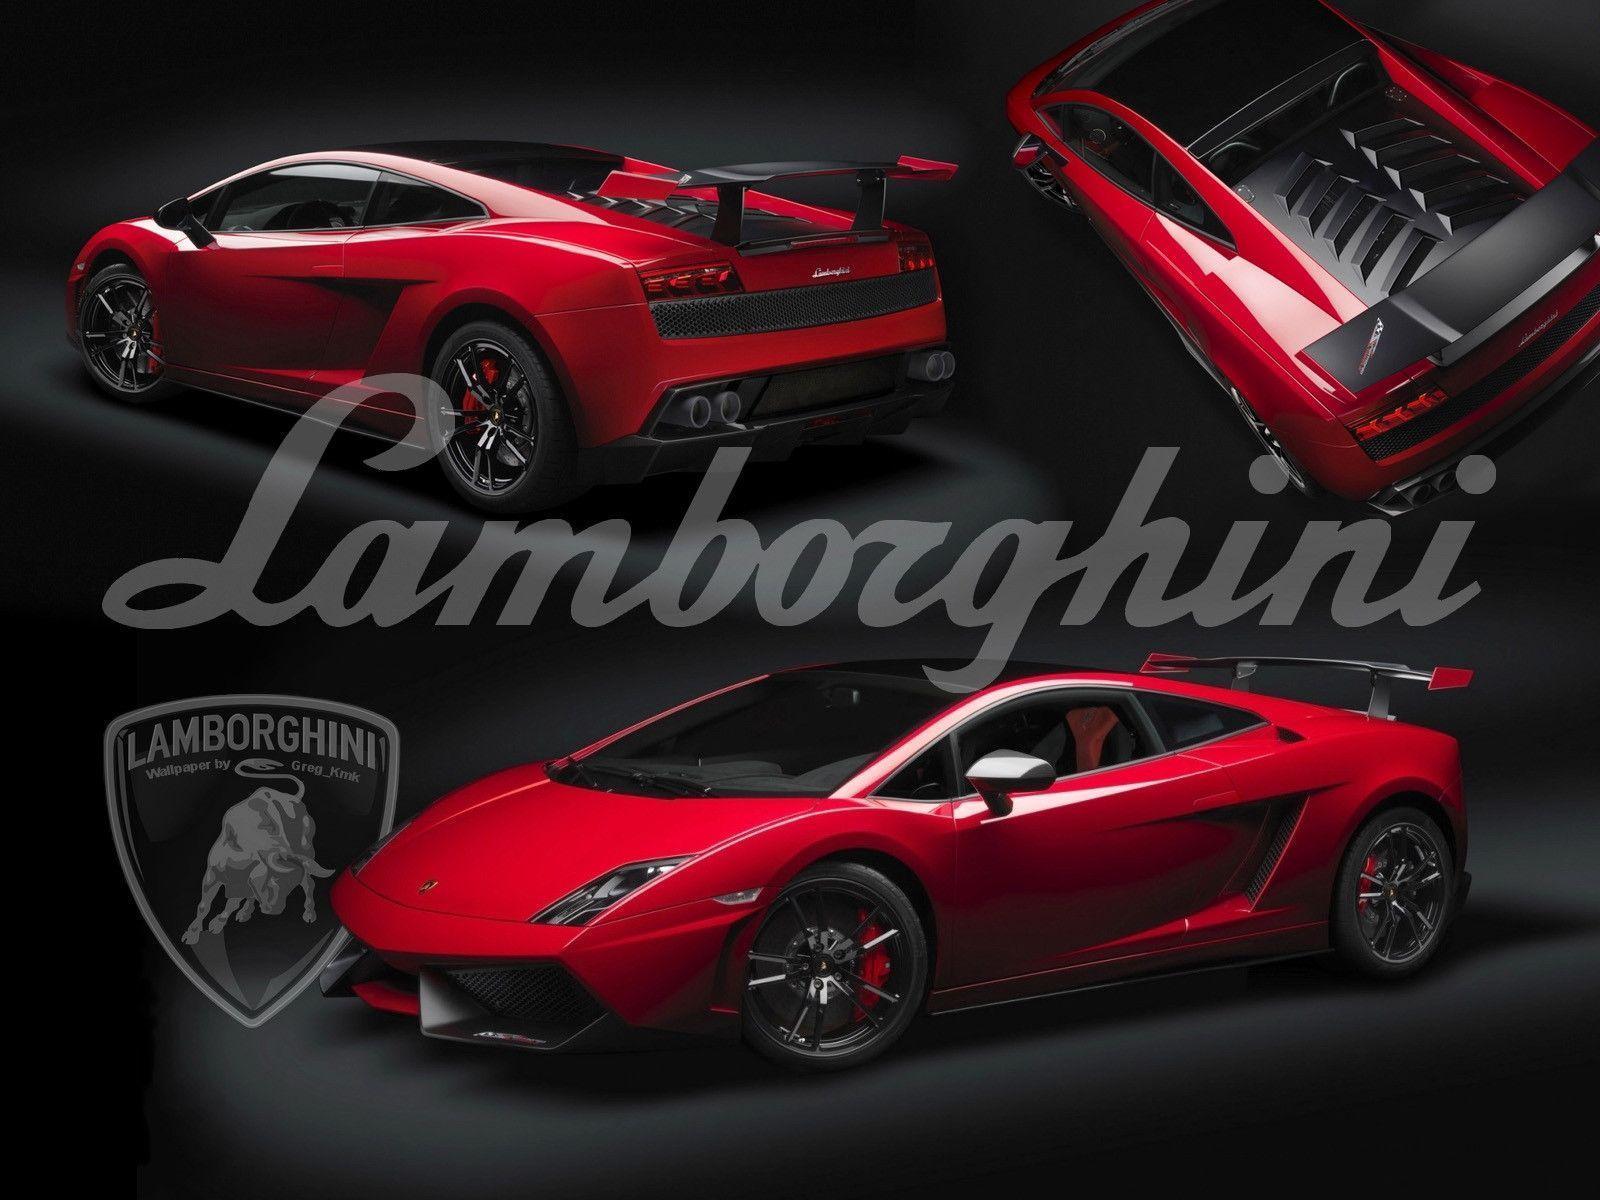 Lamborghini Gallardo Background